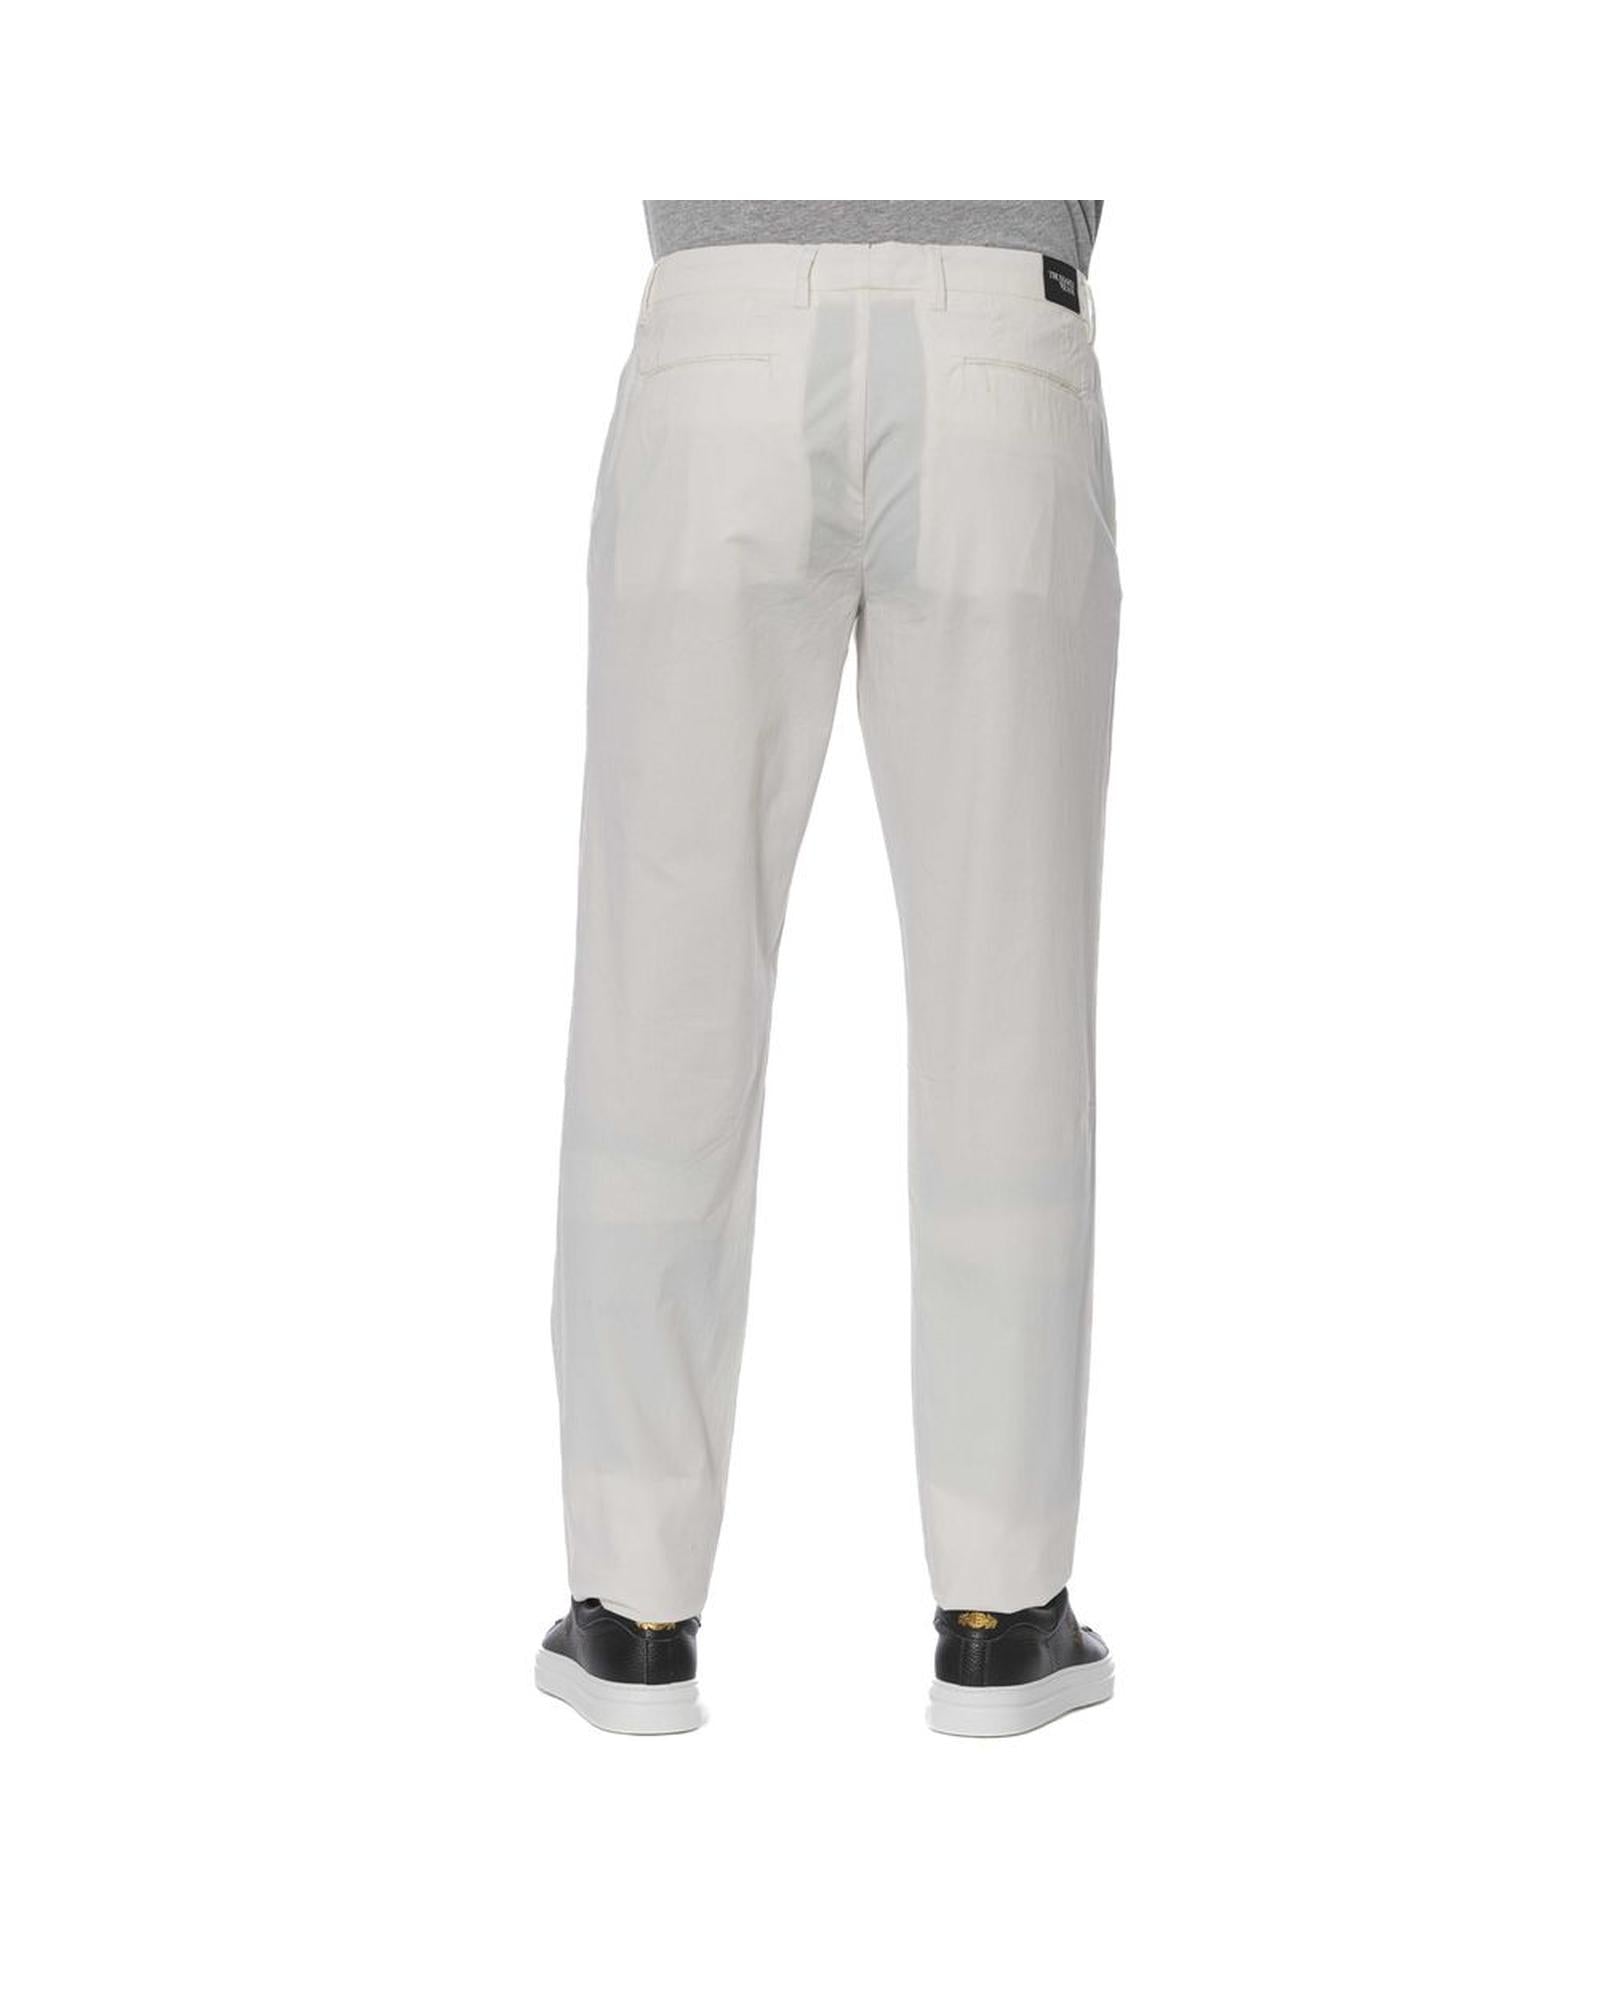 Men's White Cotton Jeans & Pant - W52 US